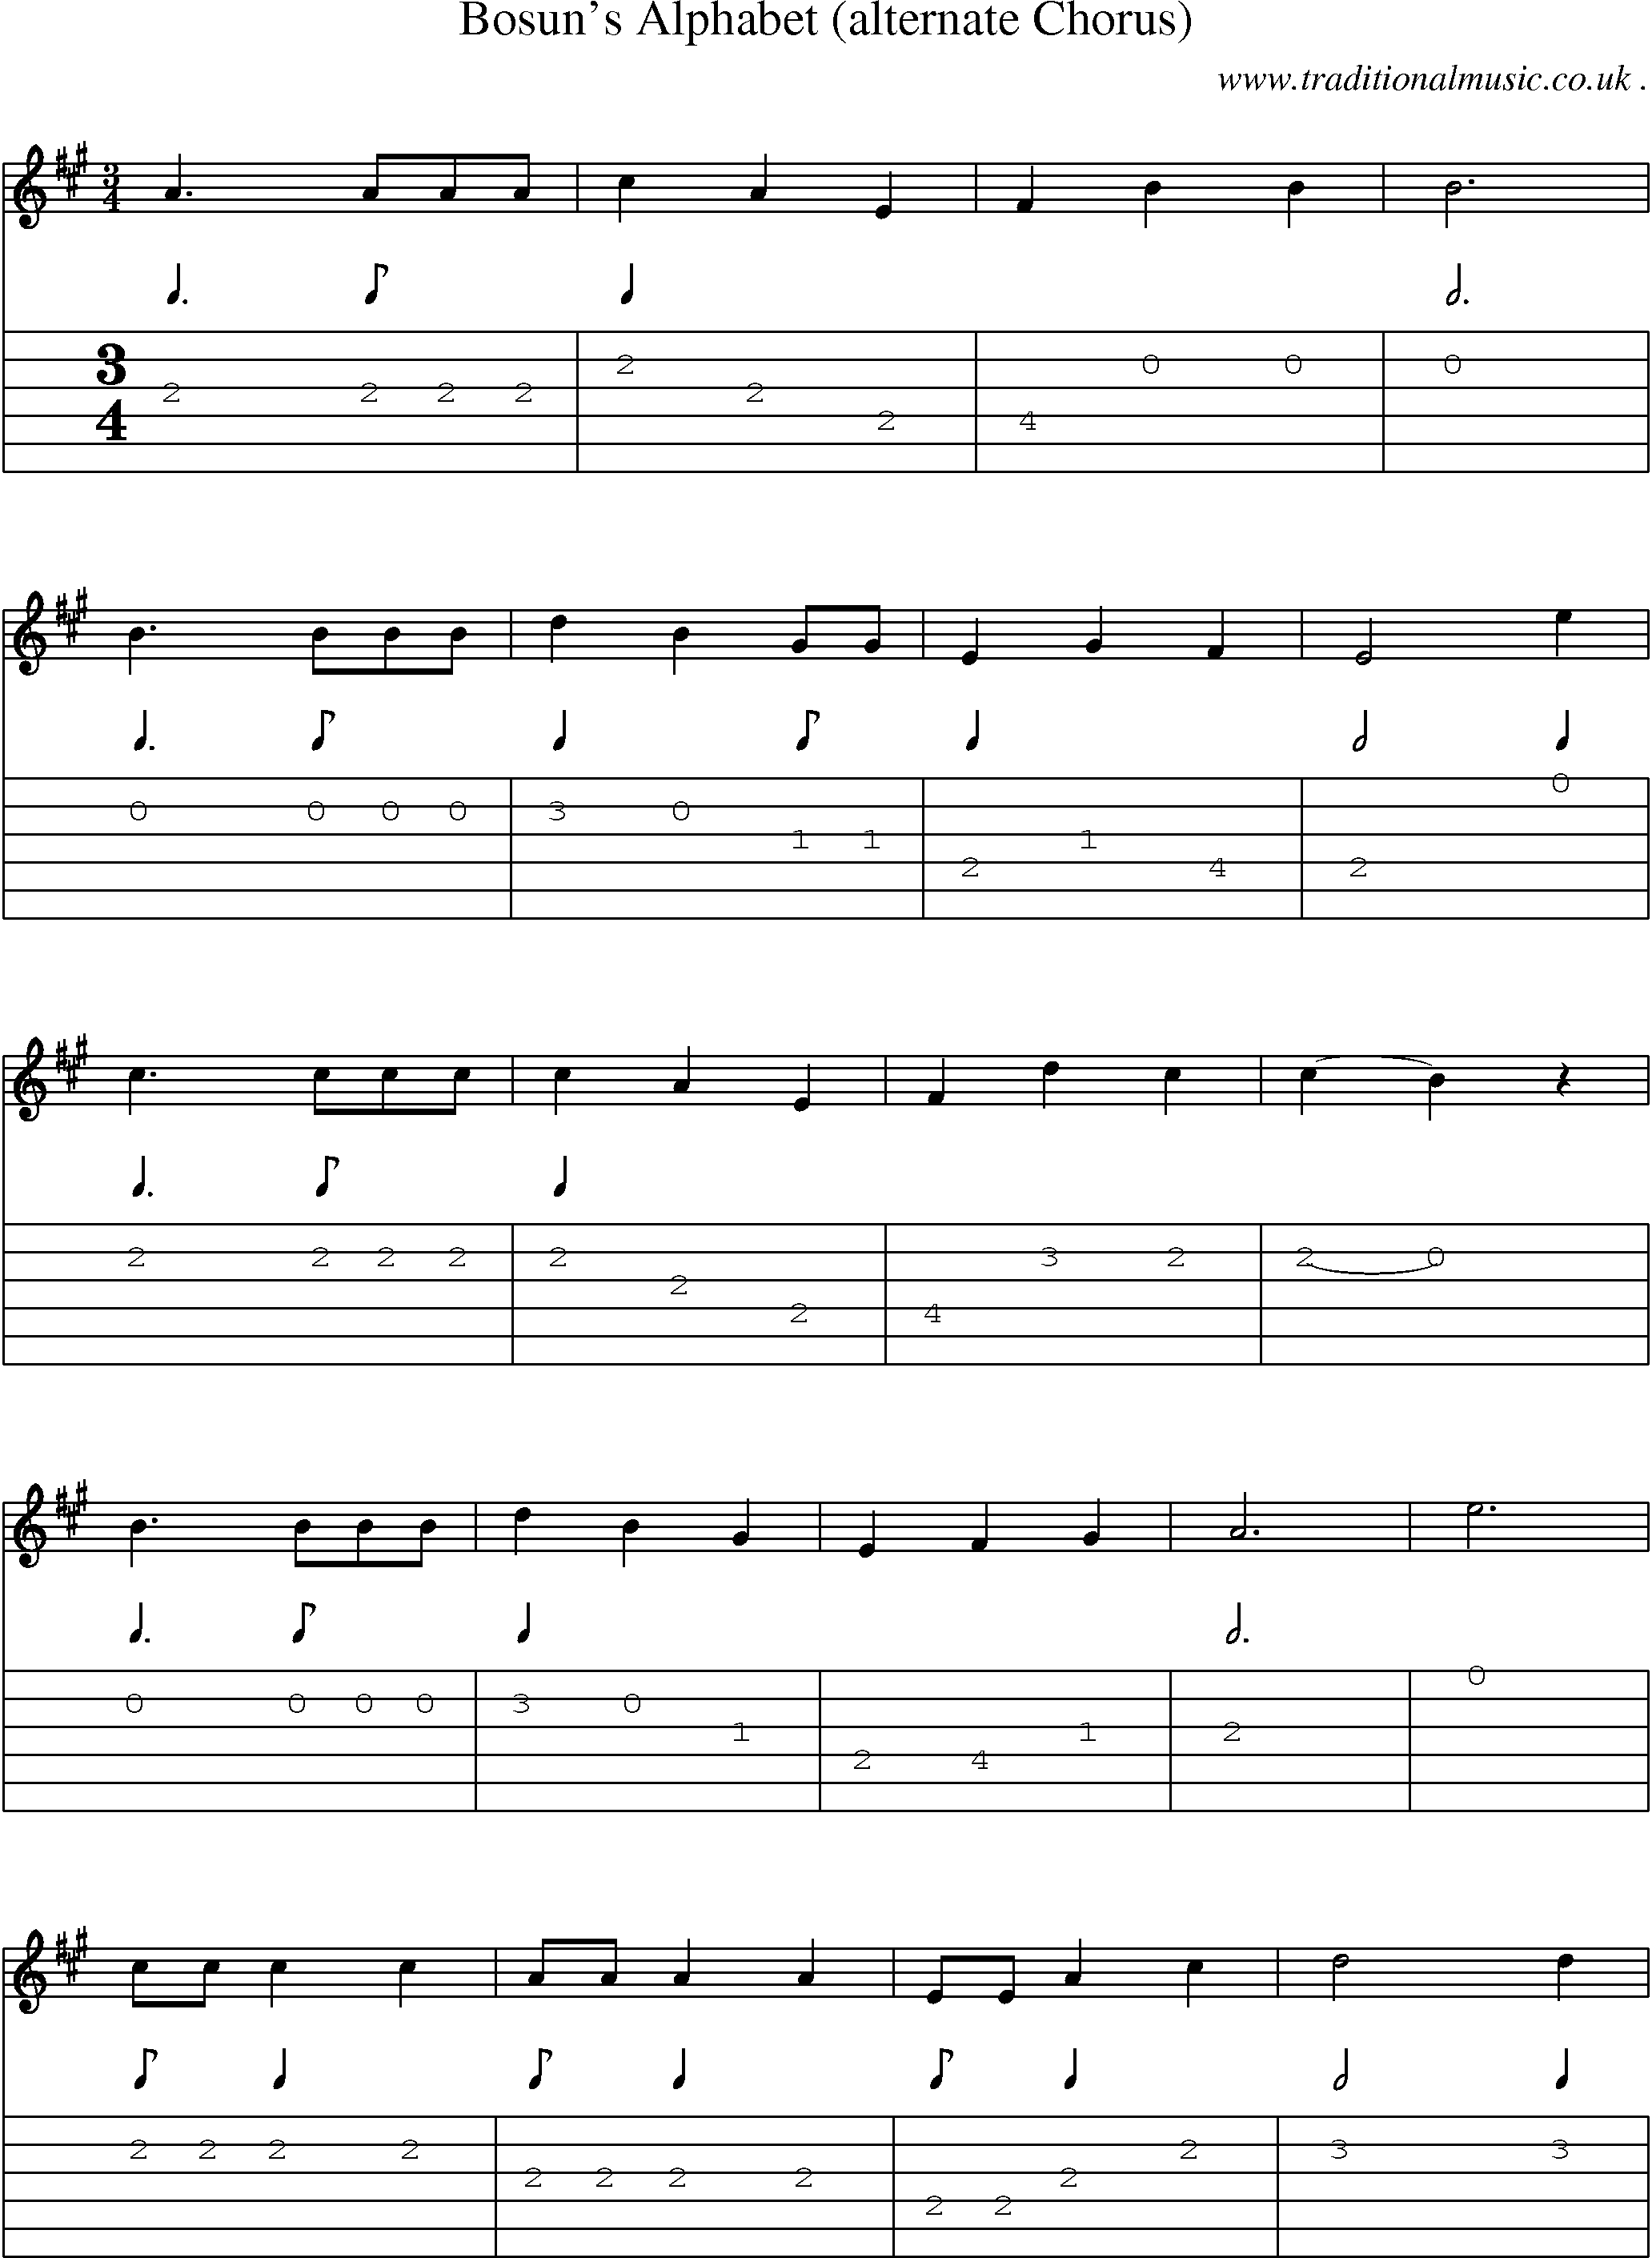 Sheet-Music and Guitar Tabs for Bosuns Alphabet (alternate Chorus)